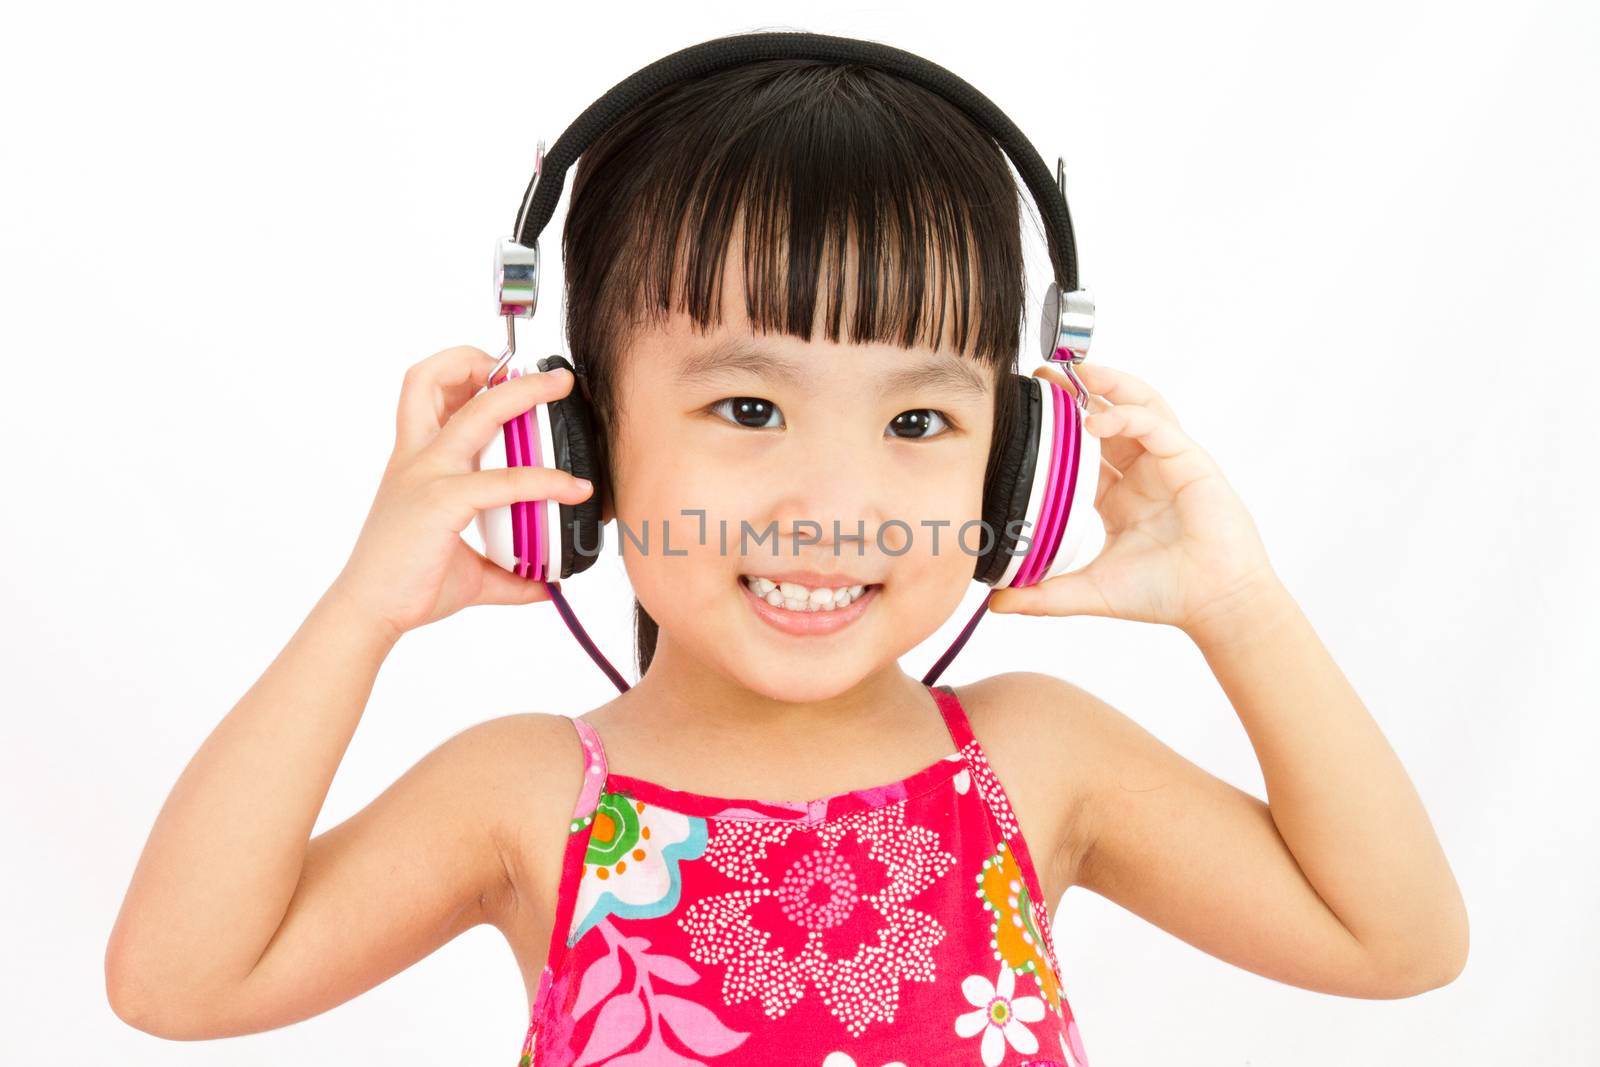 Chinese little girl on headphones by kiankhoon